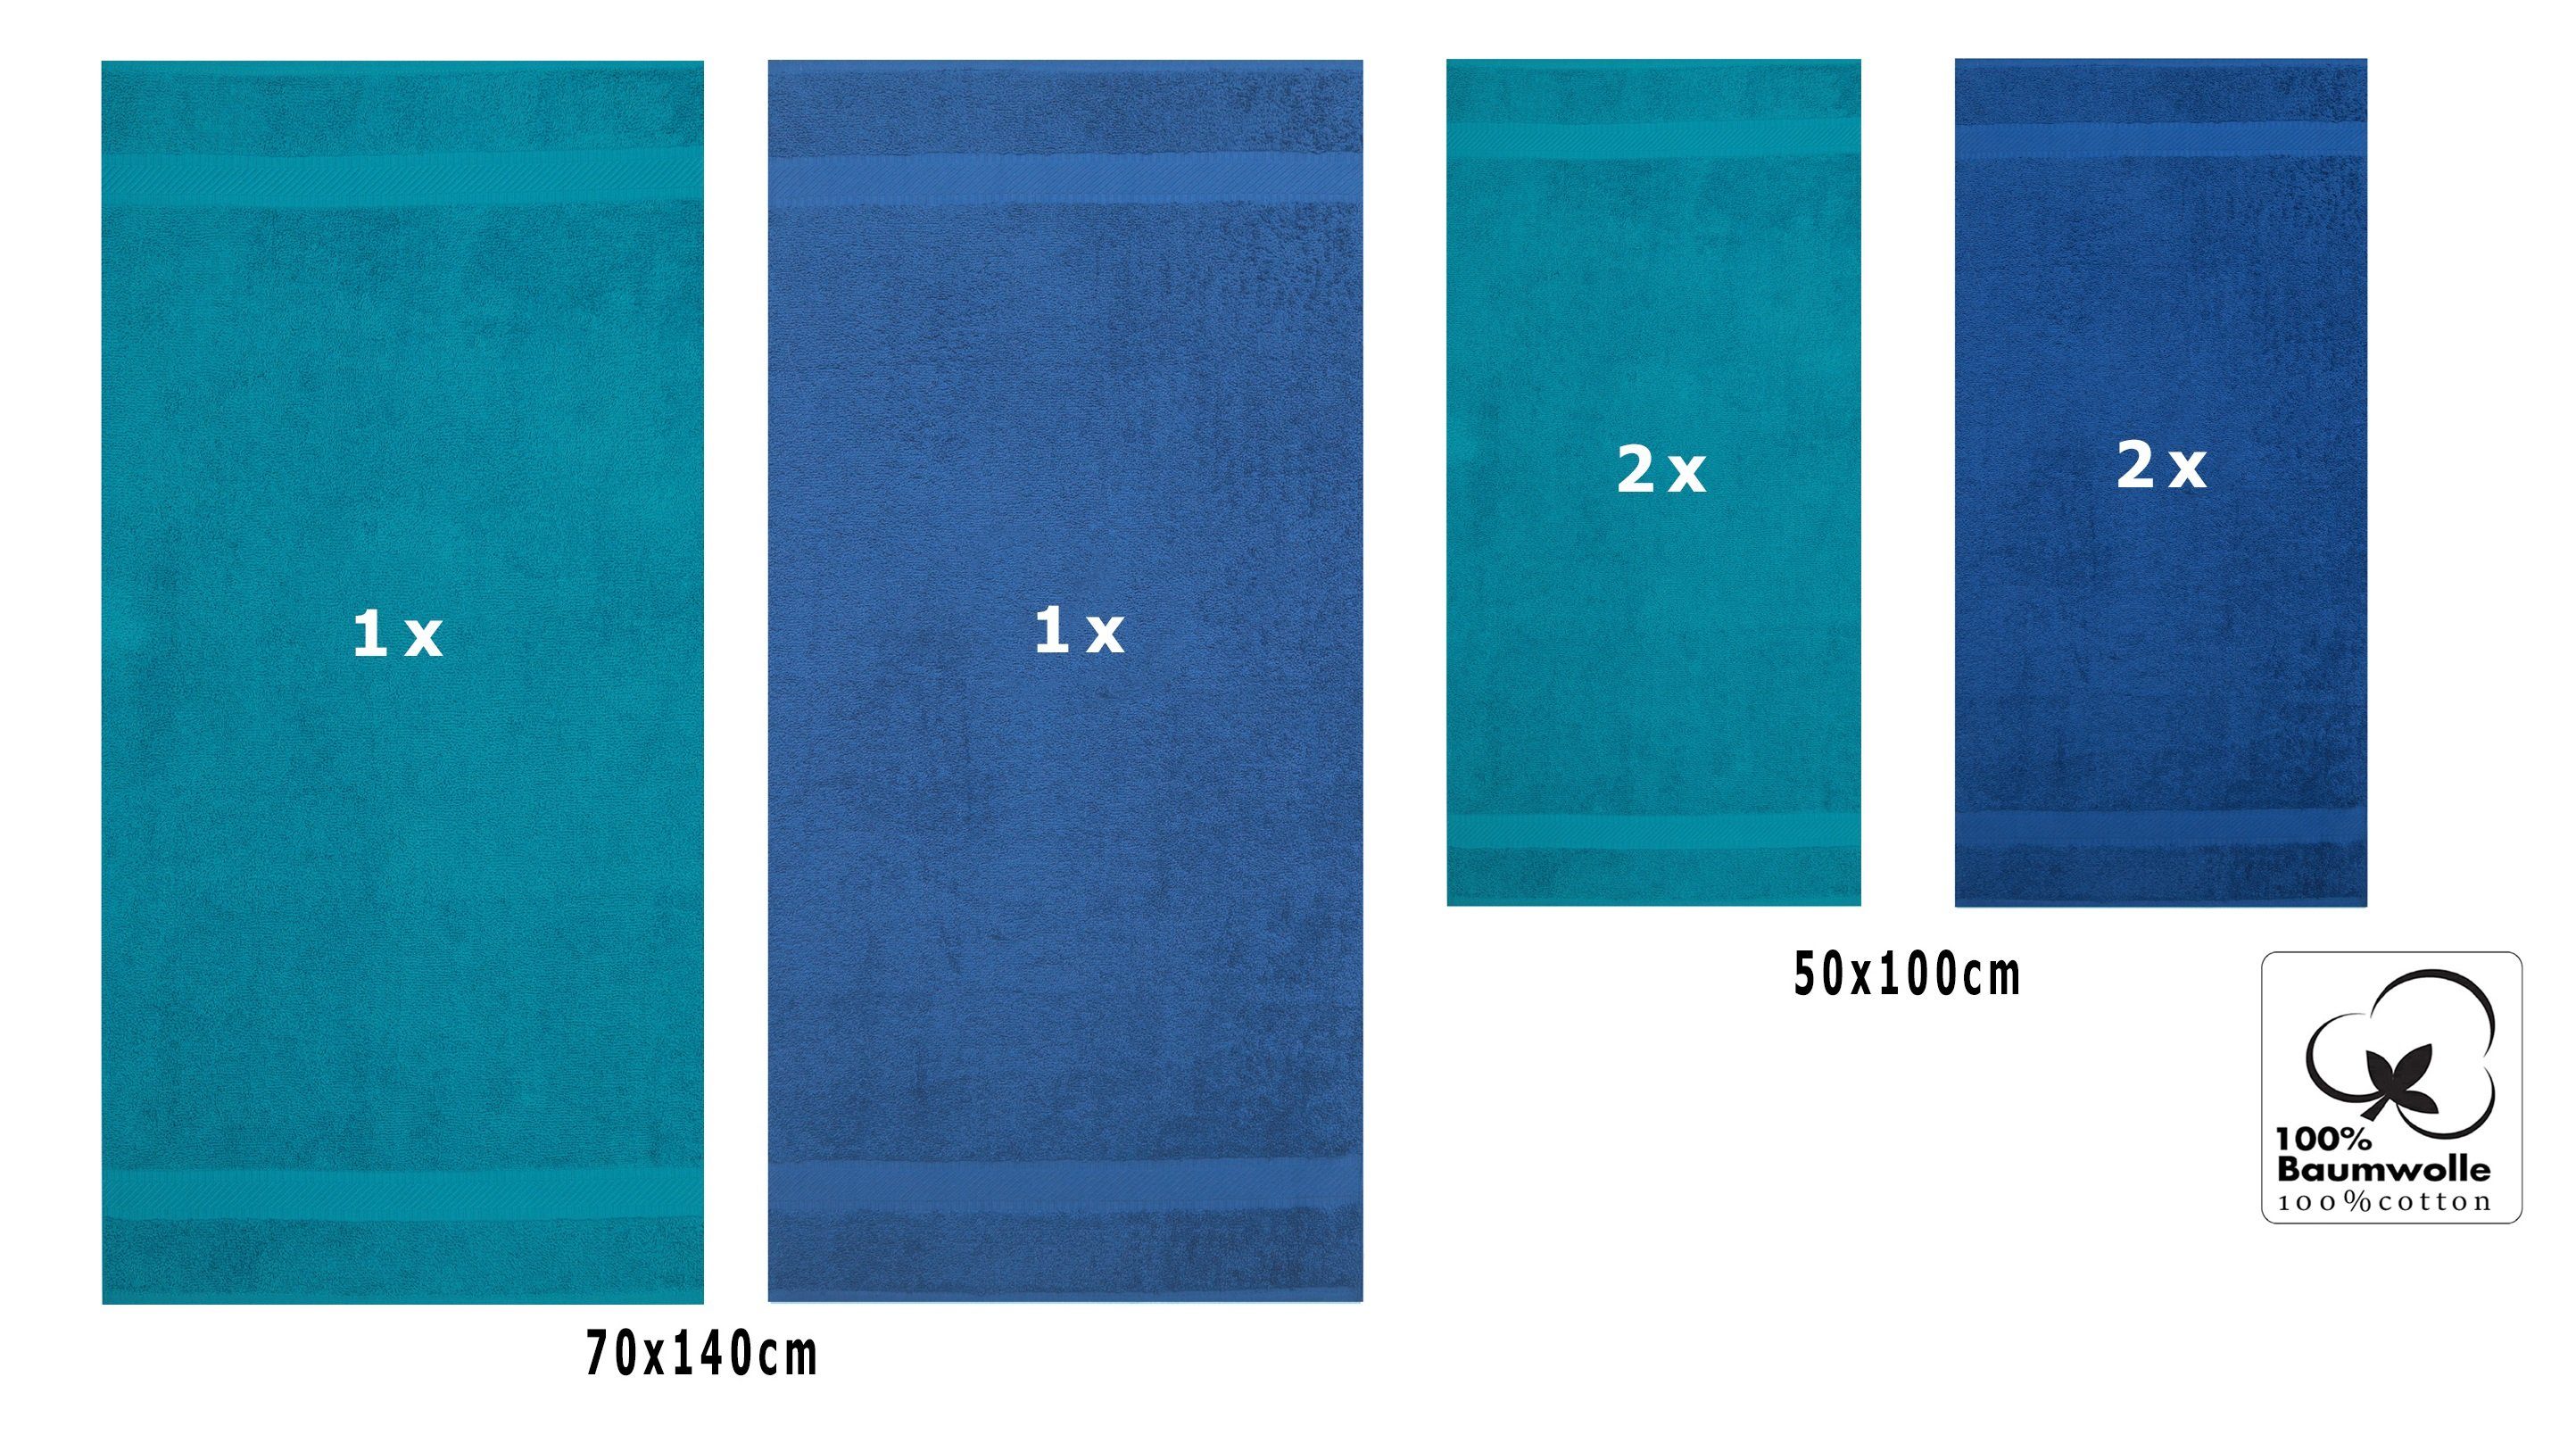 2x 70x140 4x Handtücher Handtuch 100% Baumwolle 50x100 Set cm Liegetücher petrol/blau Betz 6er Palermo cm,